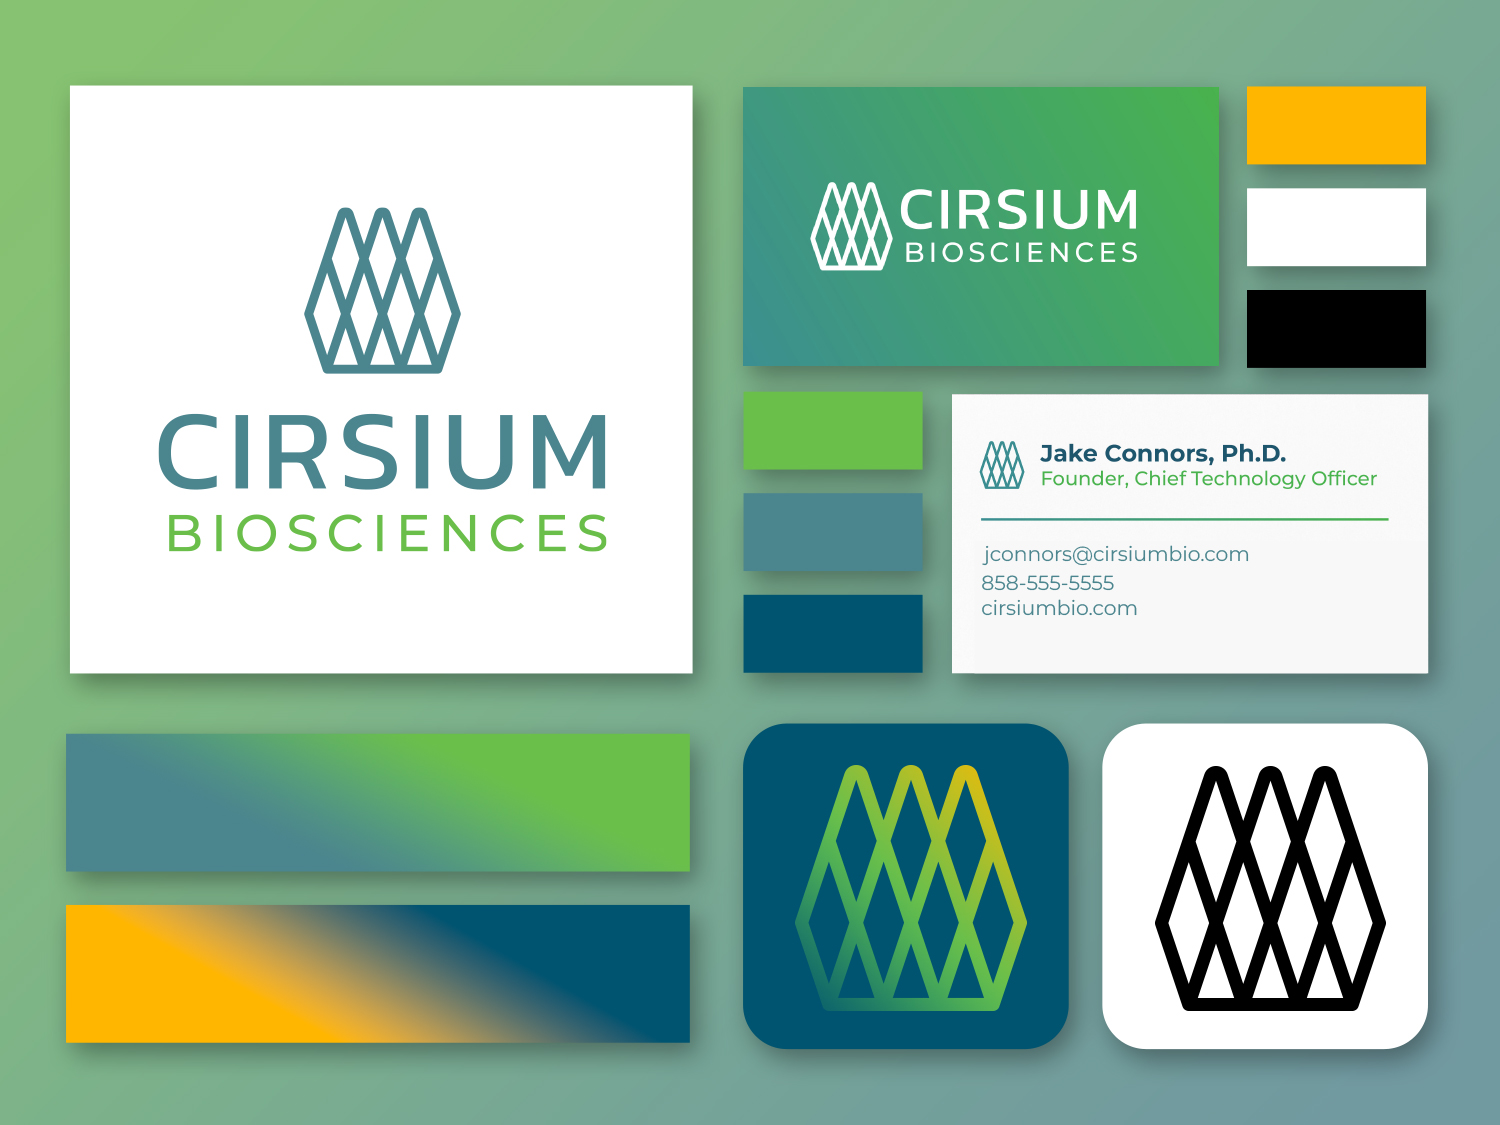 Cirsium Biosciences Brand identity in logo